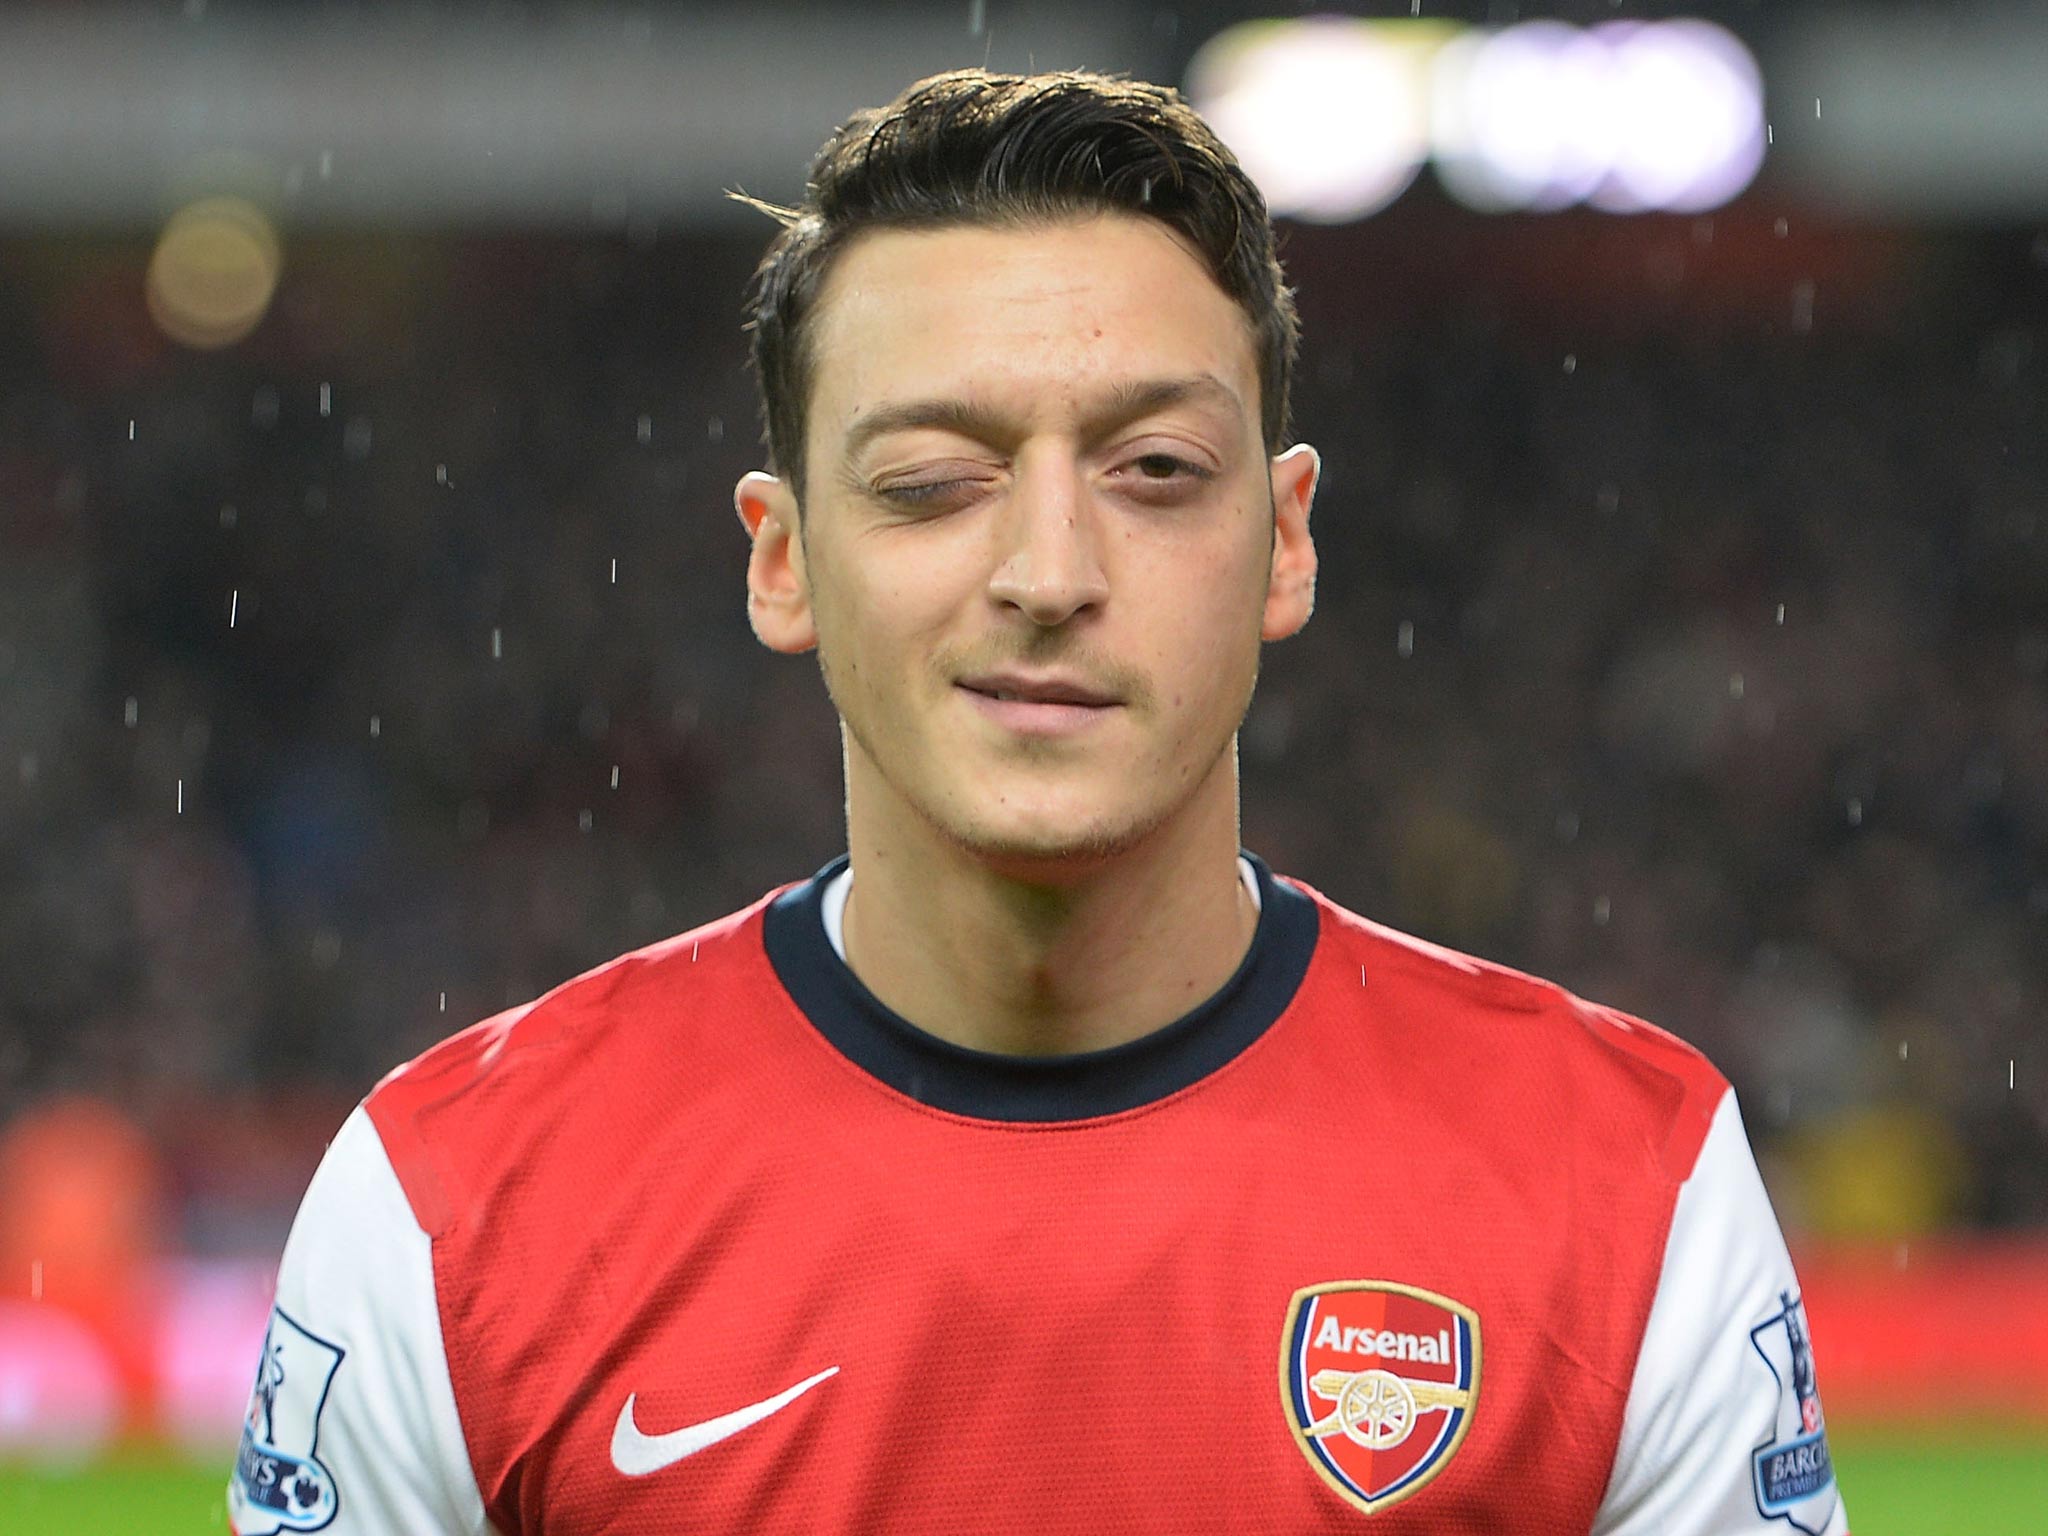 Mesut Ozil starts for Arsenal against Manchester United